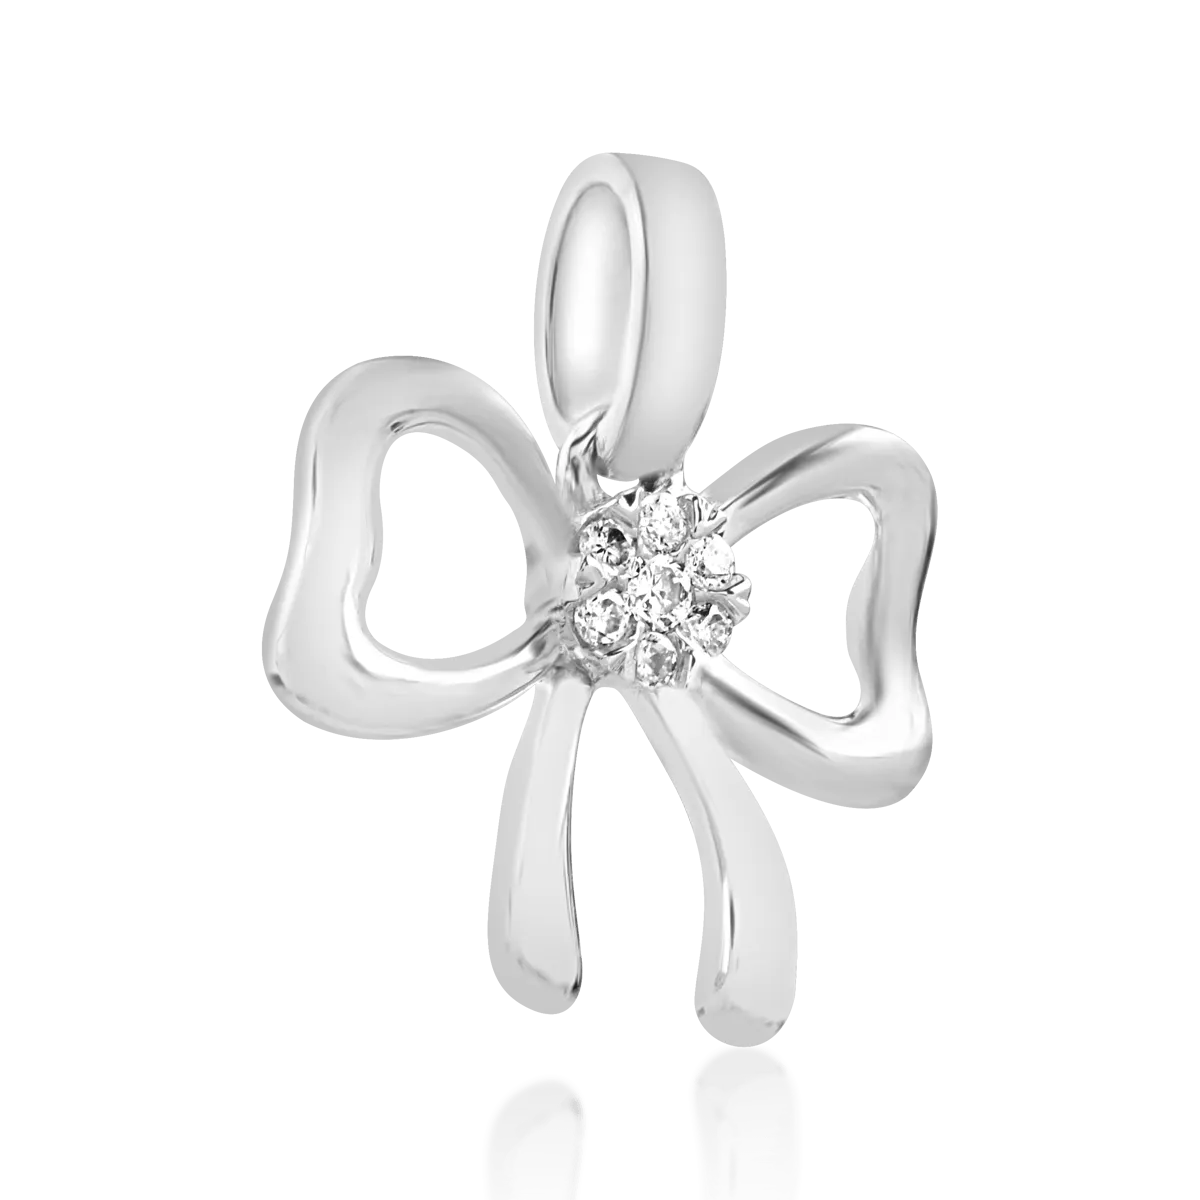 18K white gold tiny knot pendant with 0.025ct diamonds